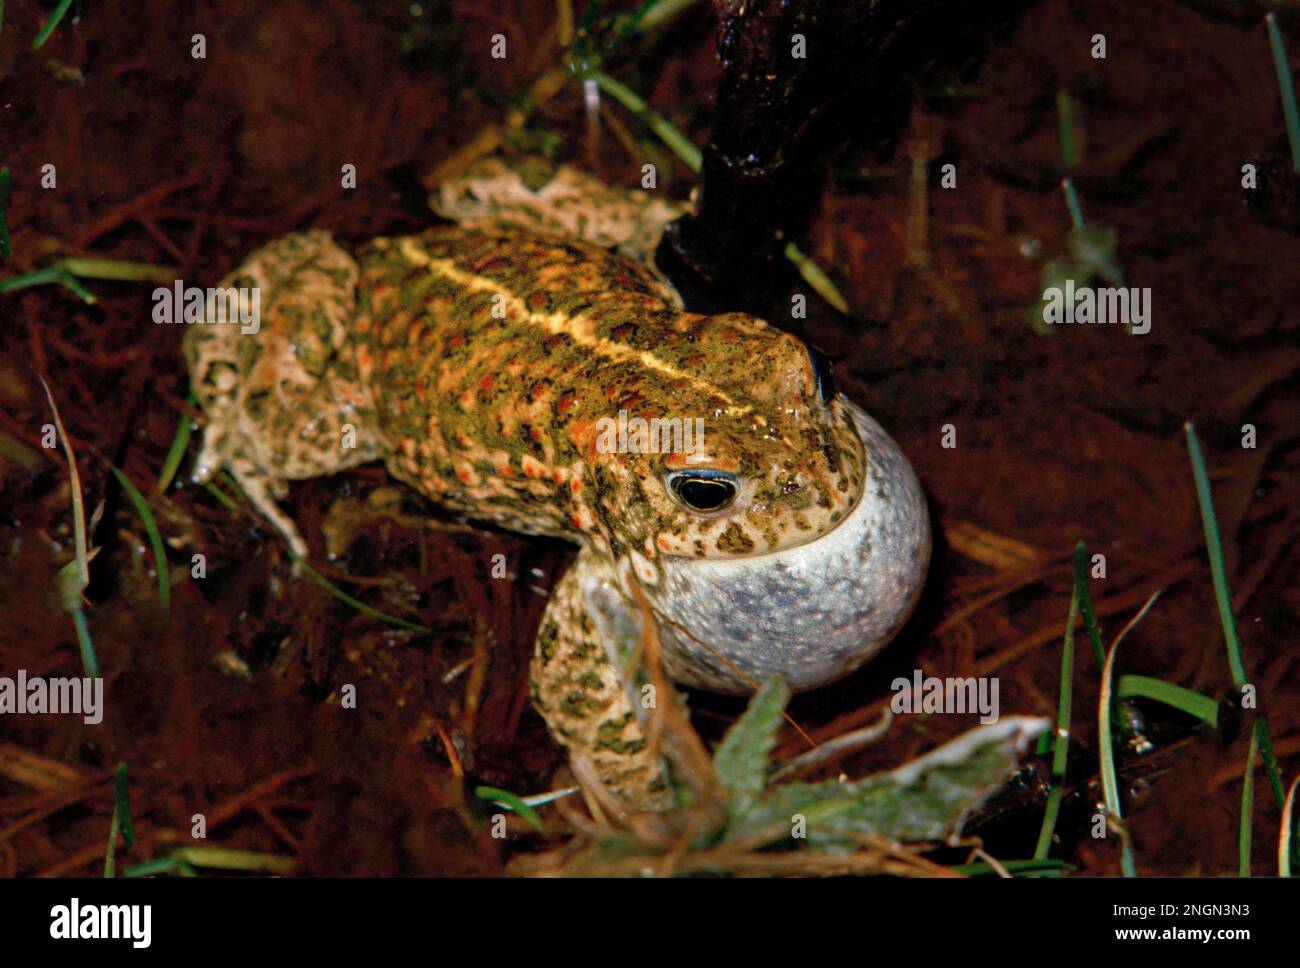 Natterjack toad, Epidalea calamita, formerly Bufo calamita, Stock Photo